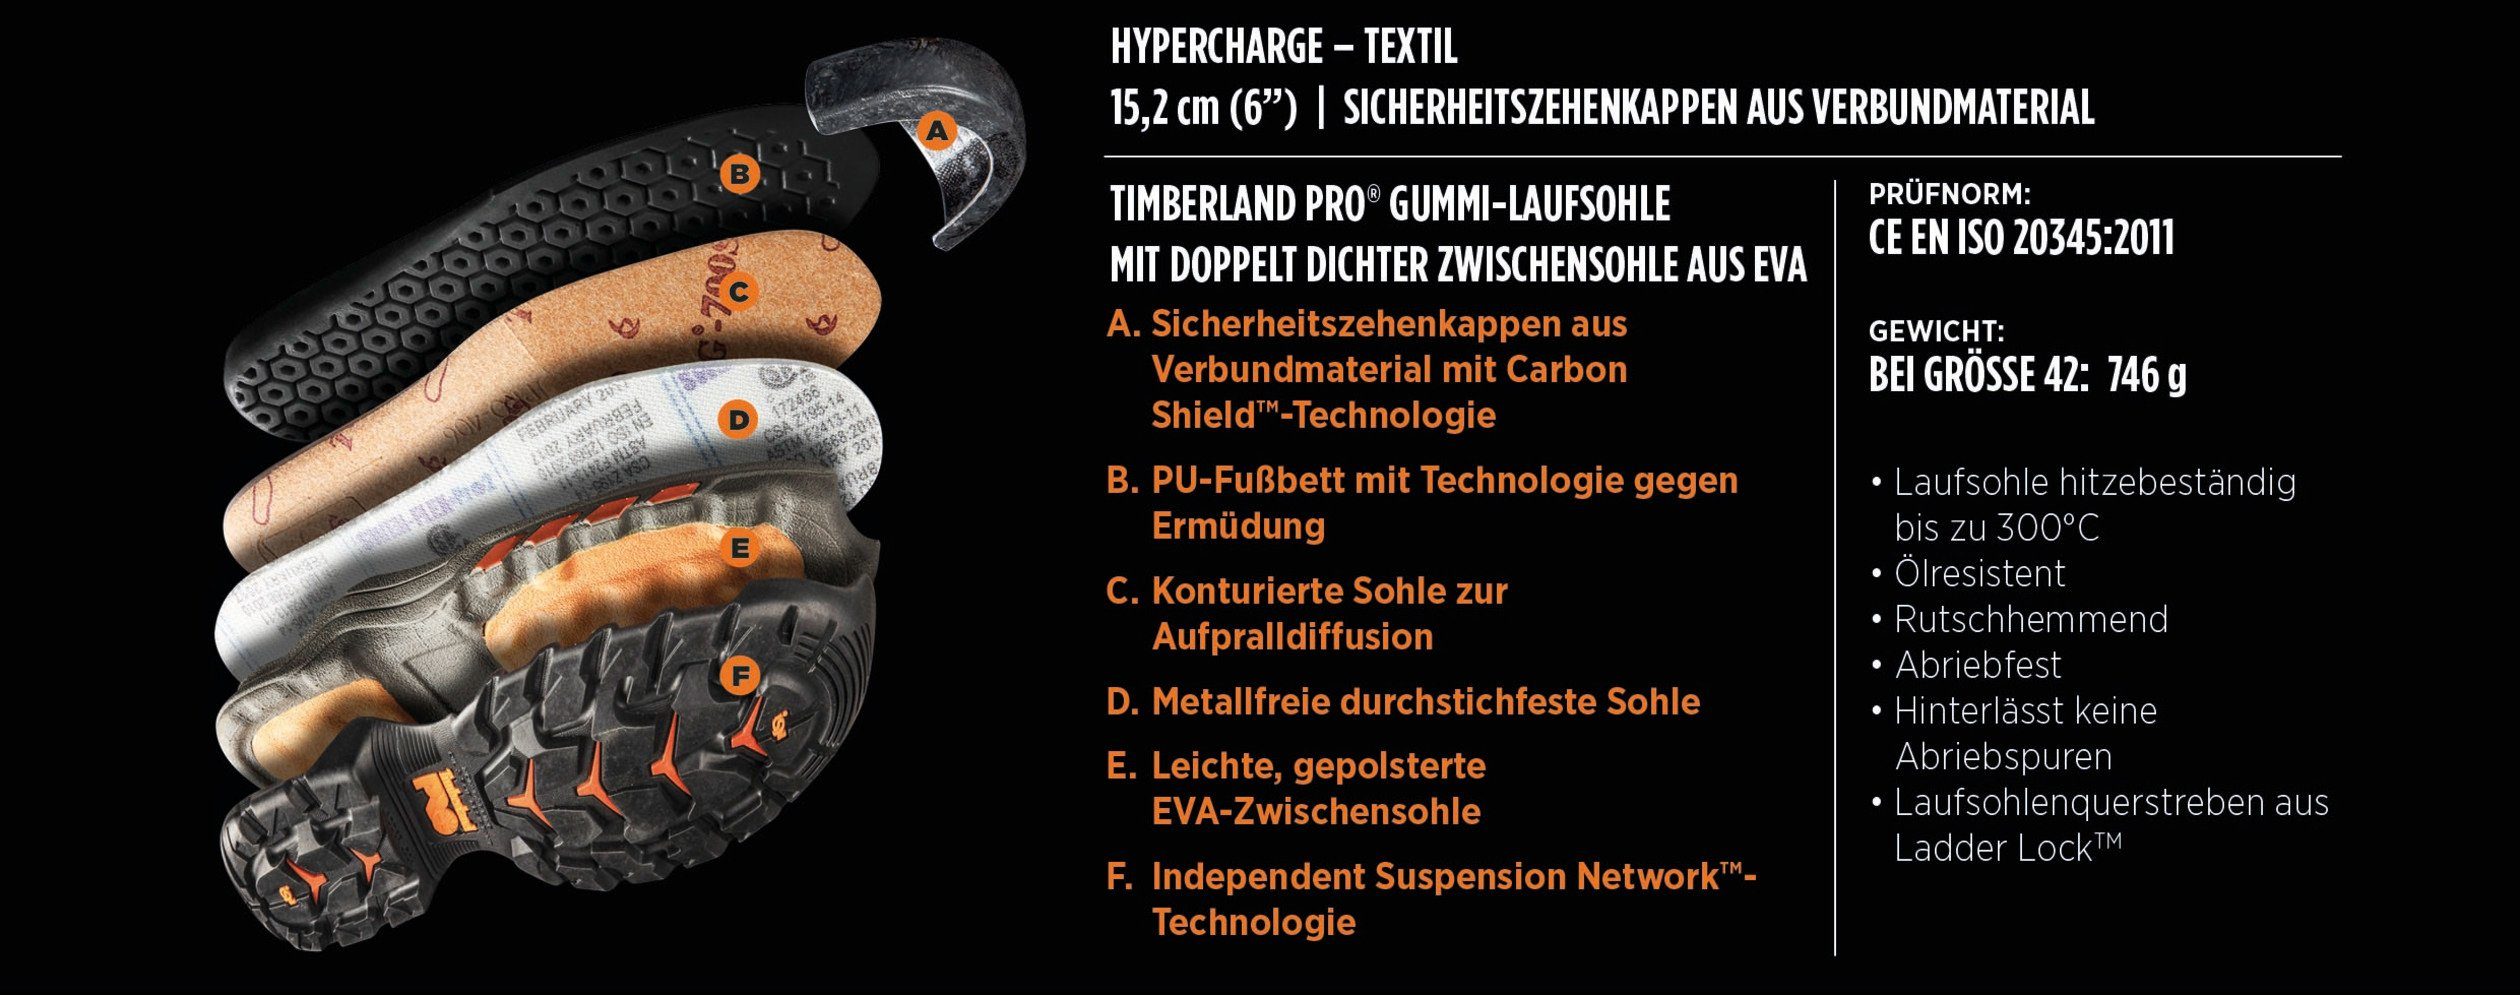 TEXTIL CORDURA®Ökogewebe Pro aus Sicherheitsstiefel S3, Recyclingmaterial HYPERCHARGE Timberland